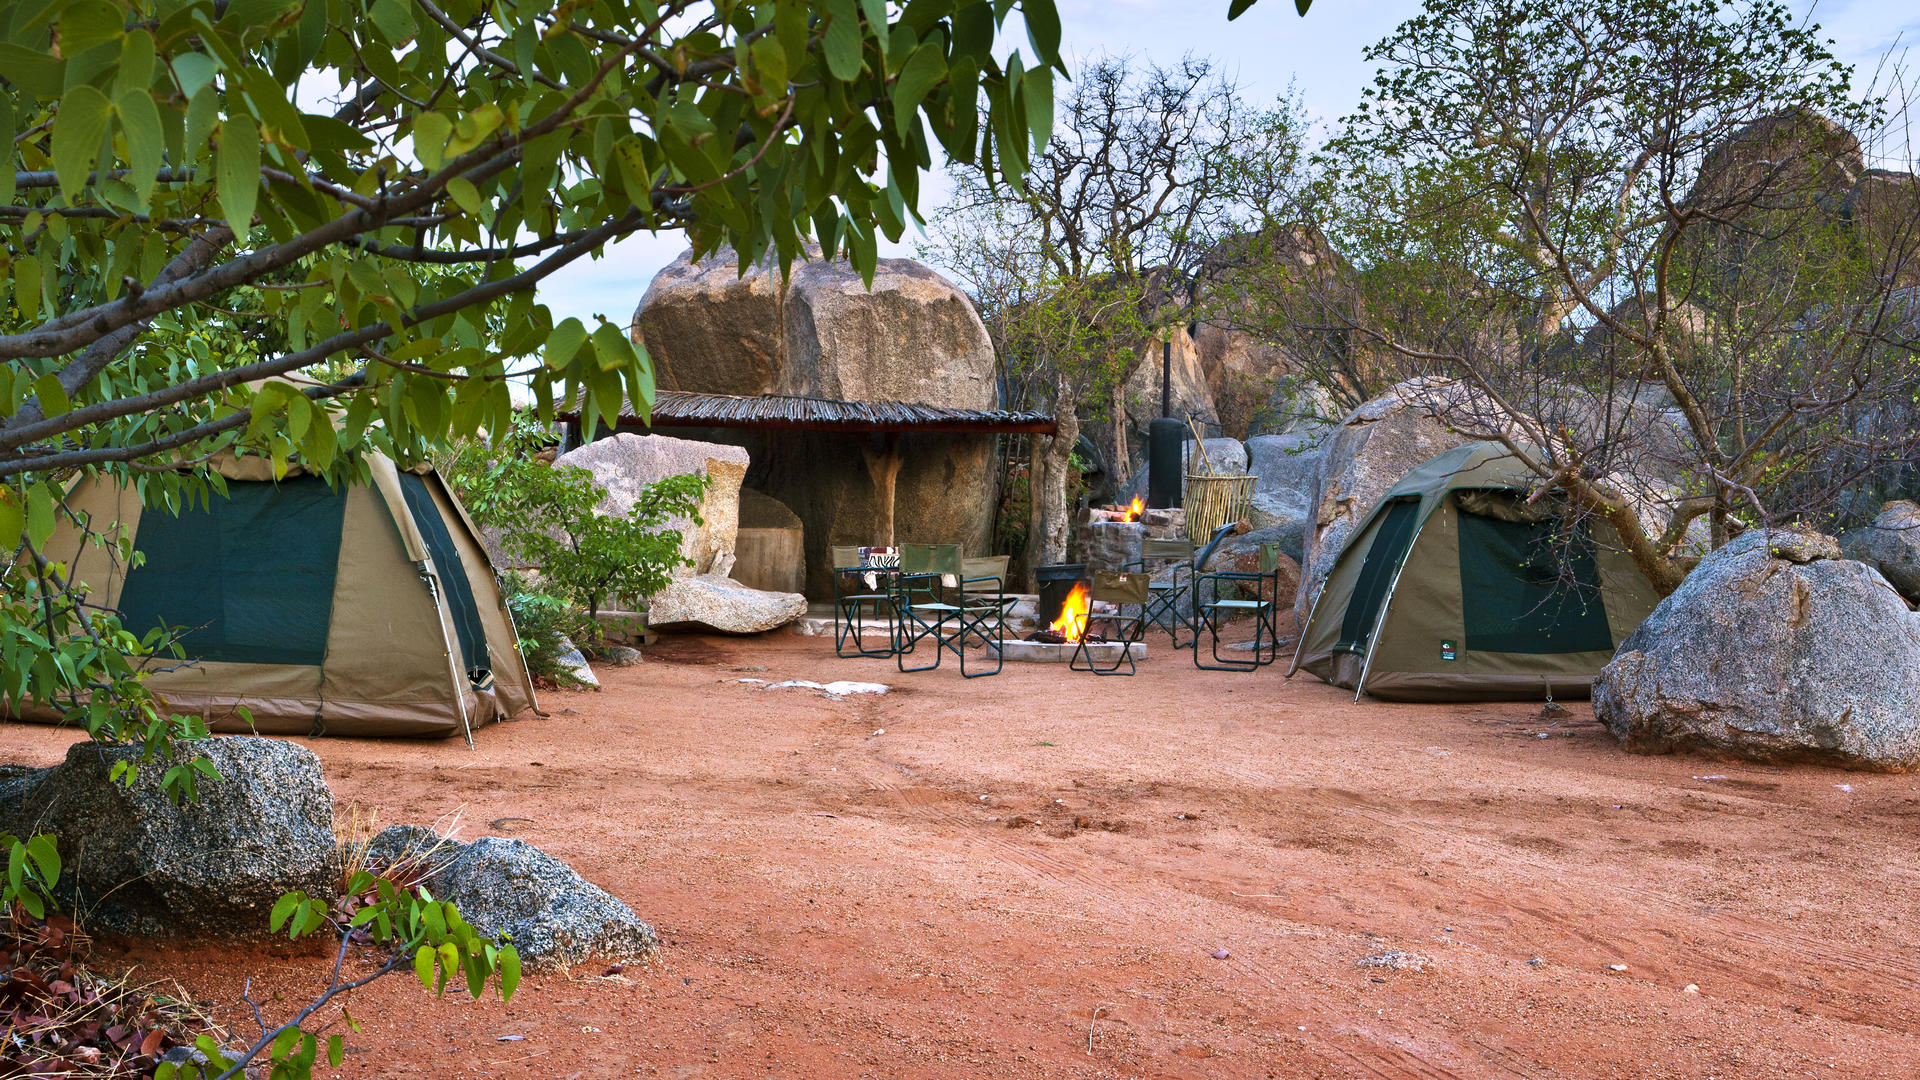 Camping site. Намибия кемпинг. Camp site. Twyfelfontain Campsite Namibia.